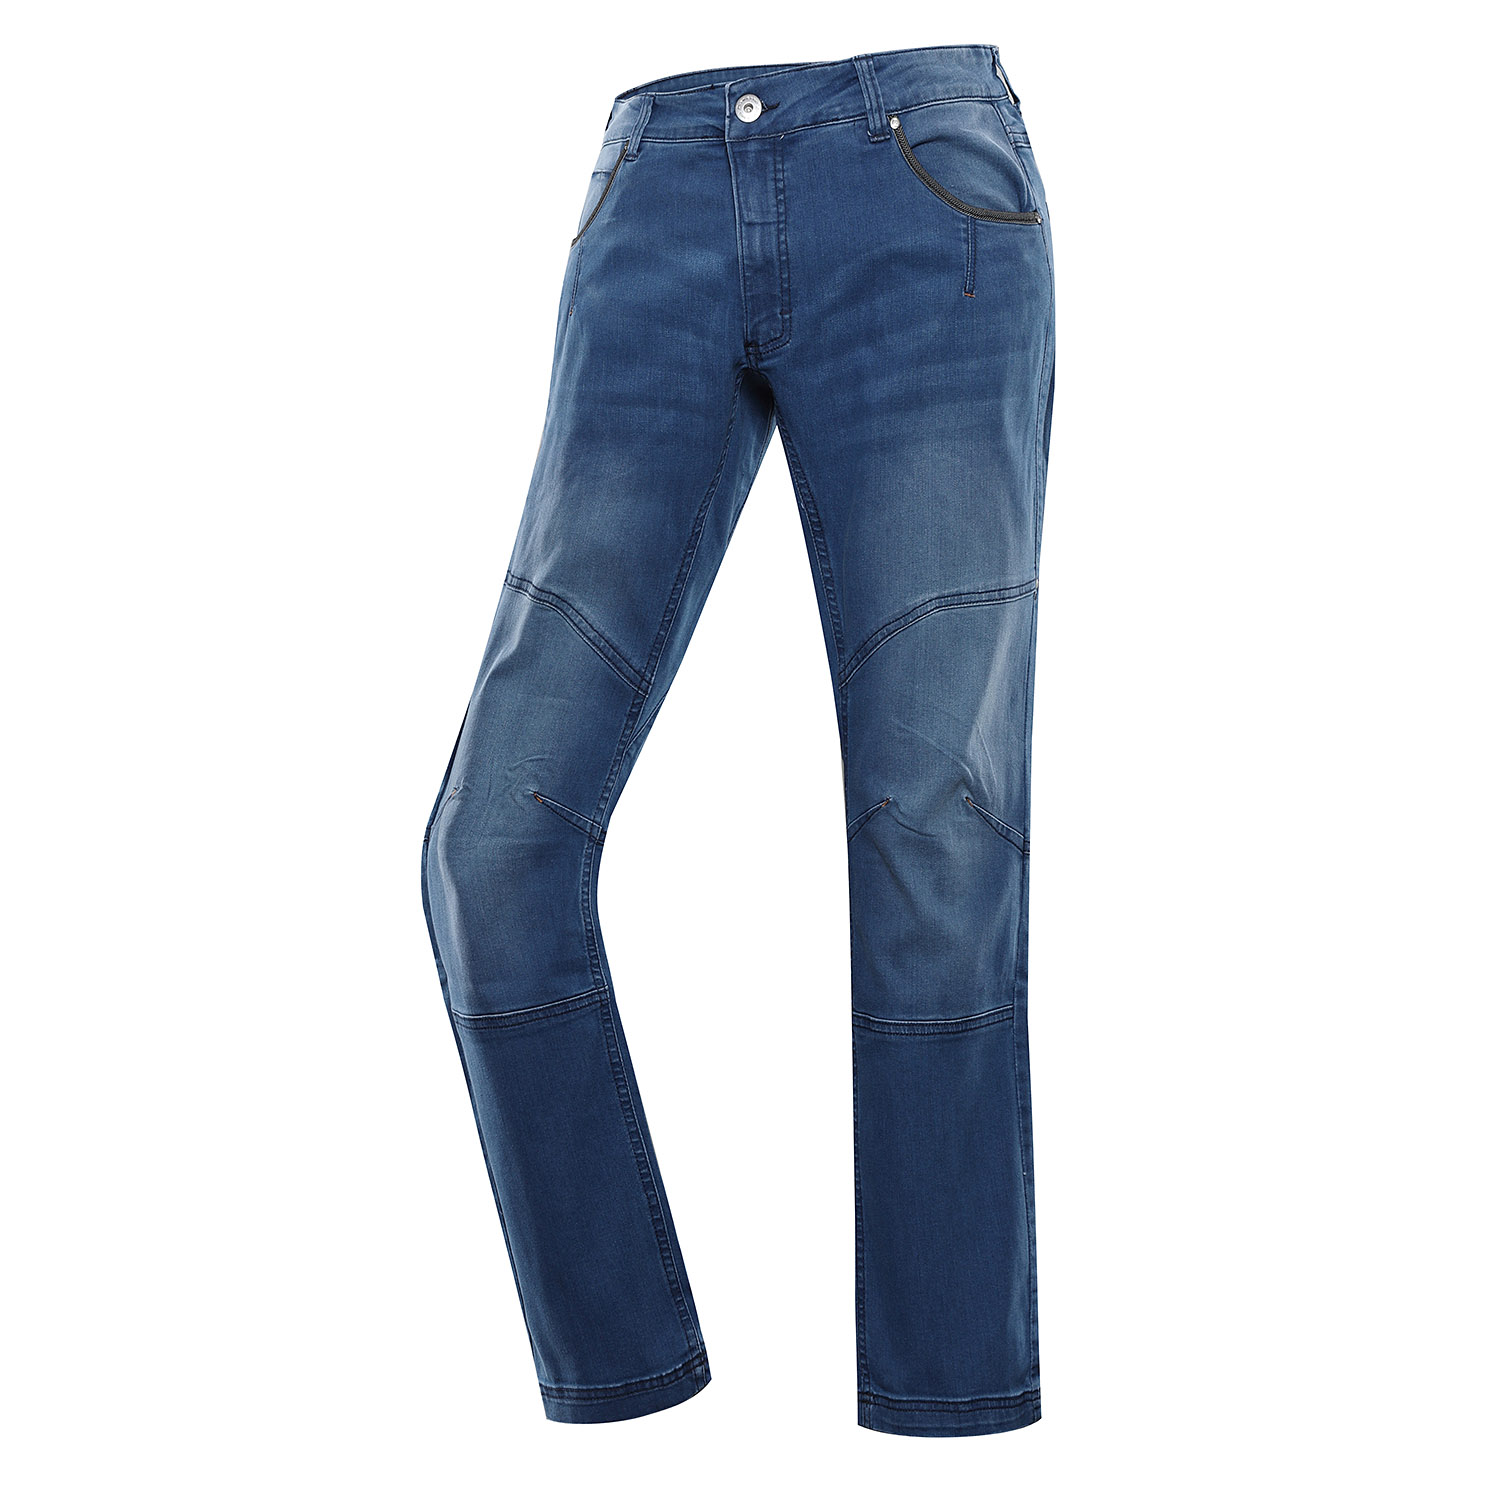 Men's jeans ALPINE PRO QIZOB mood indigo